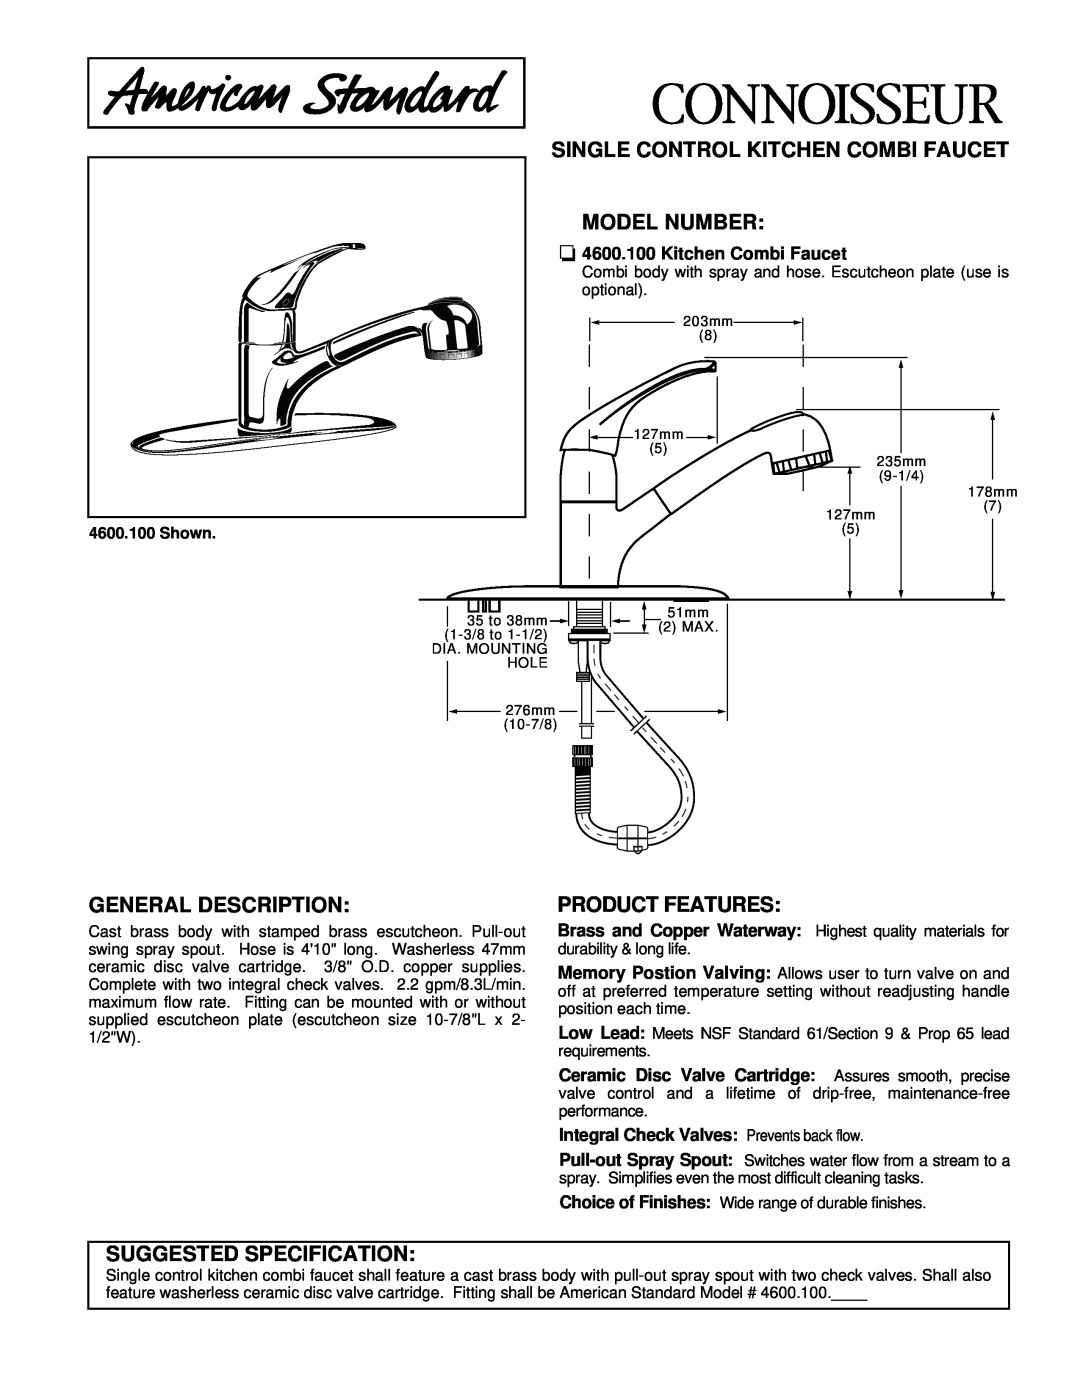 American Standard 4600.100 specifications Single Control Kitchen Combi Faucet Model Number, General Description, Shown 